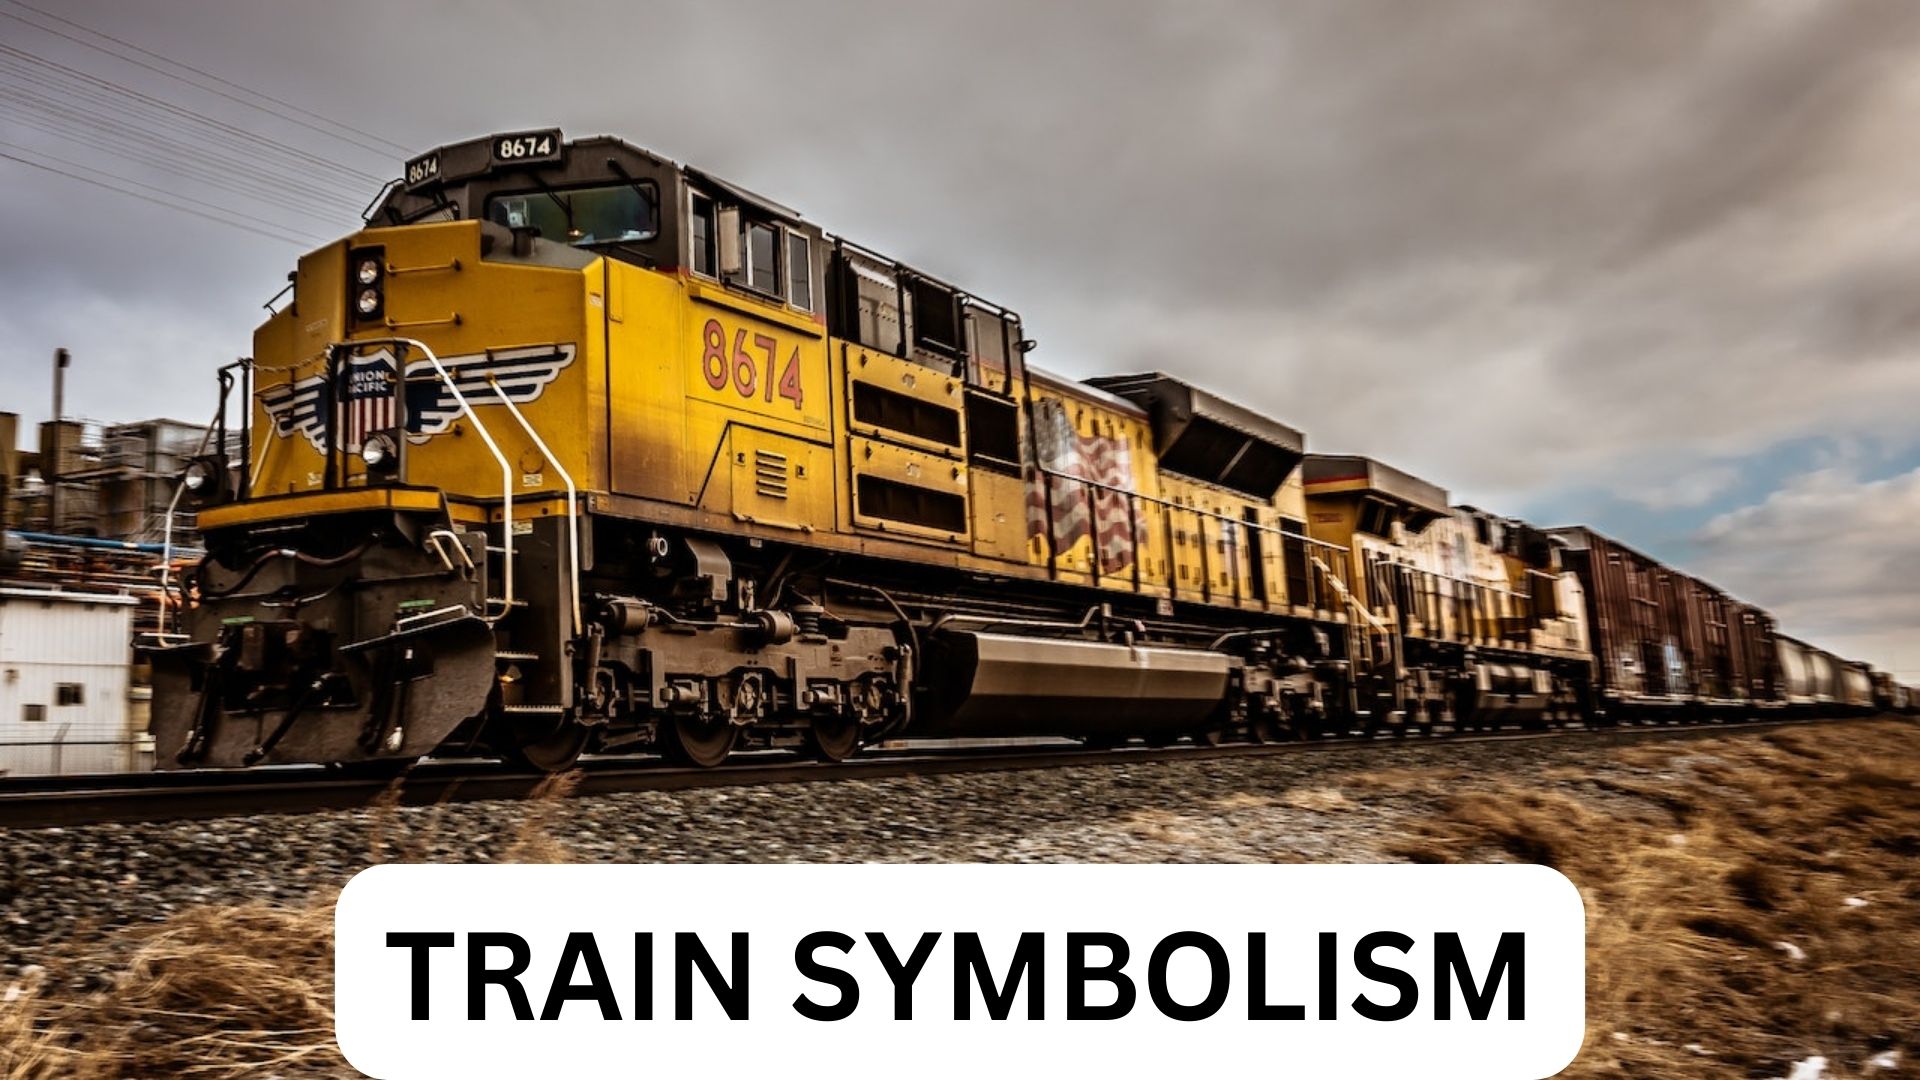 Train Symbolism - Progress & New Opportunities